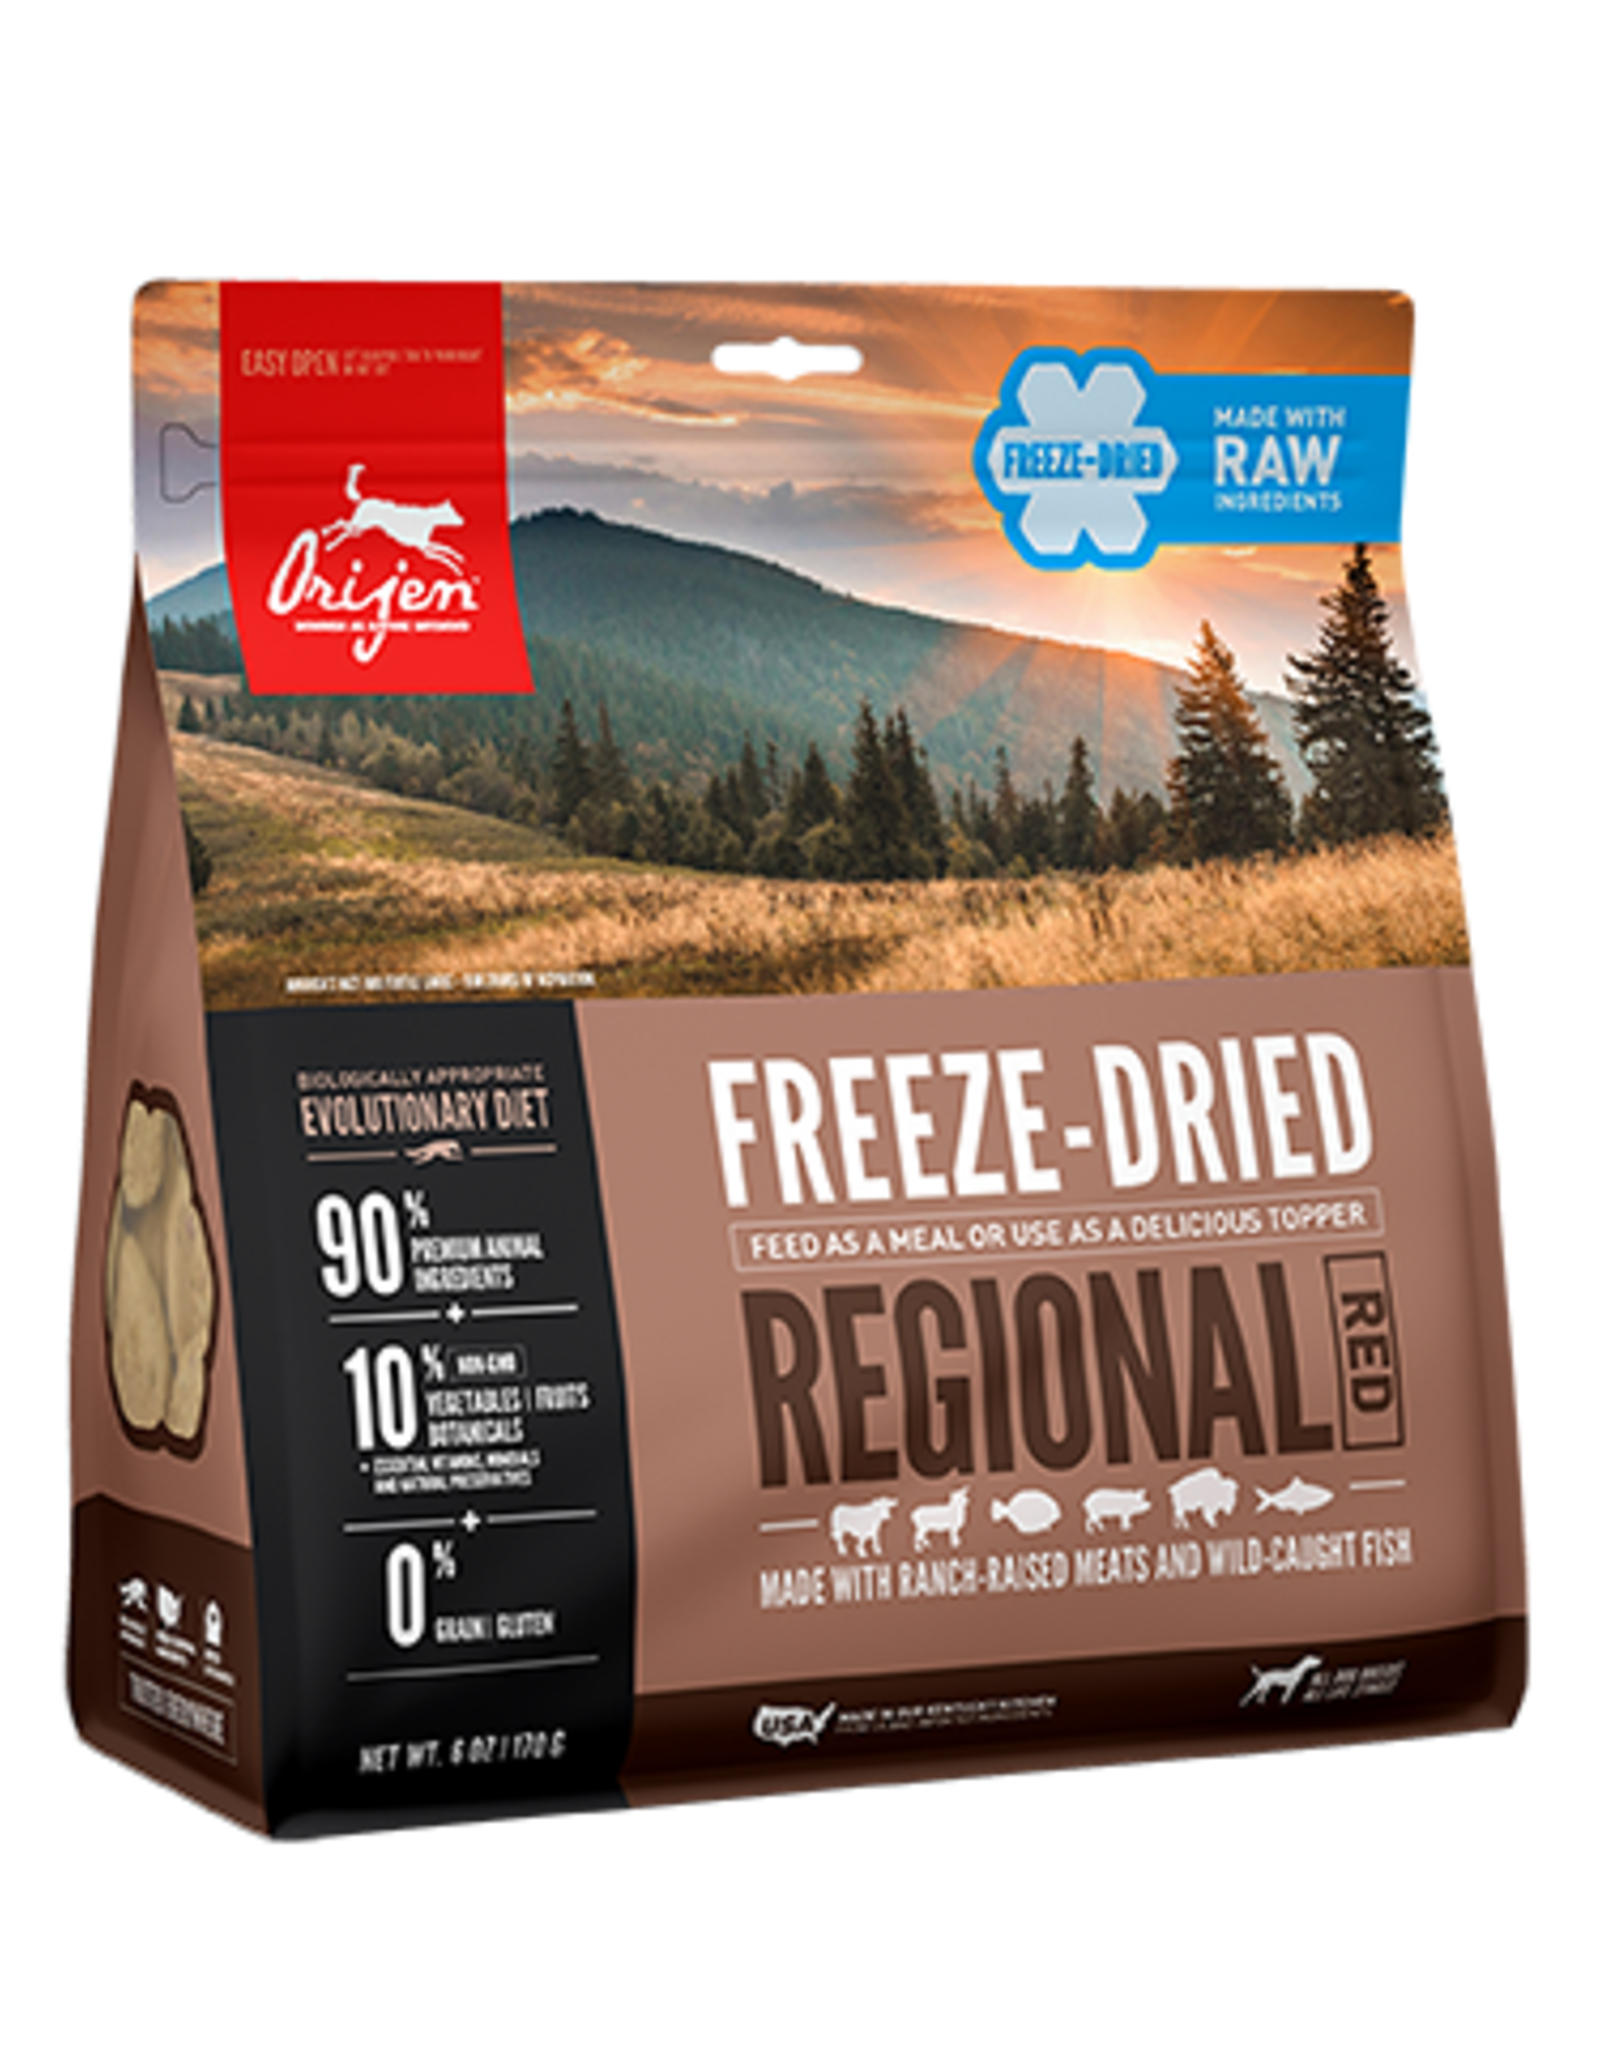 Orijen Dog Food Freeze Dried Regional Red Pawtopia Your Pet's